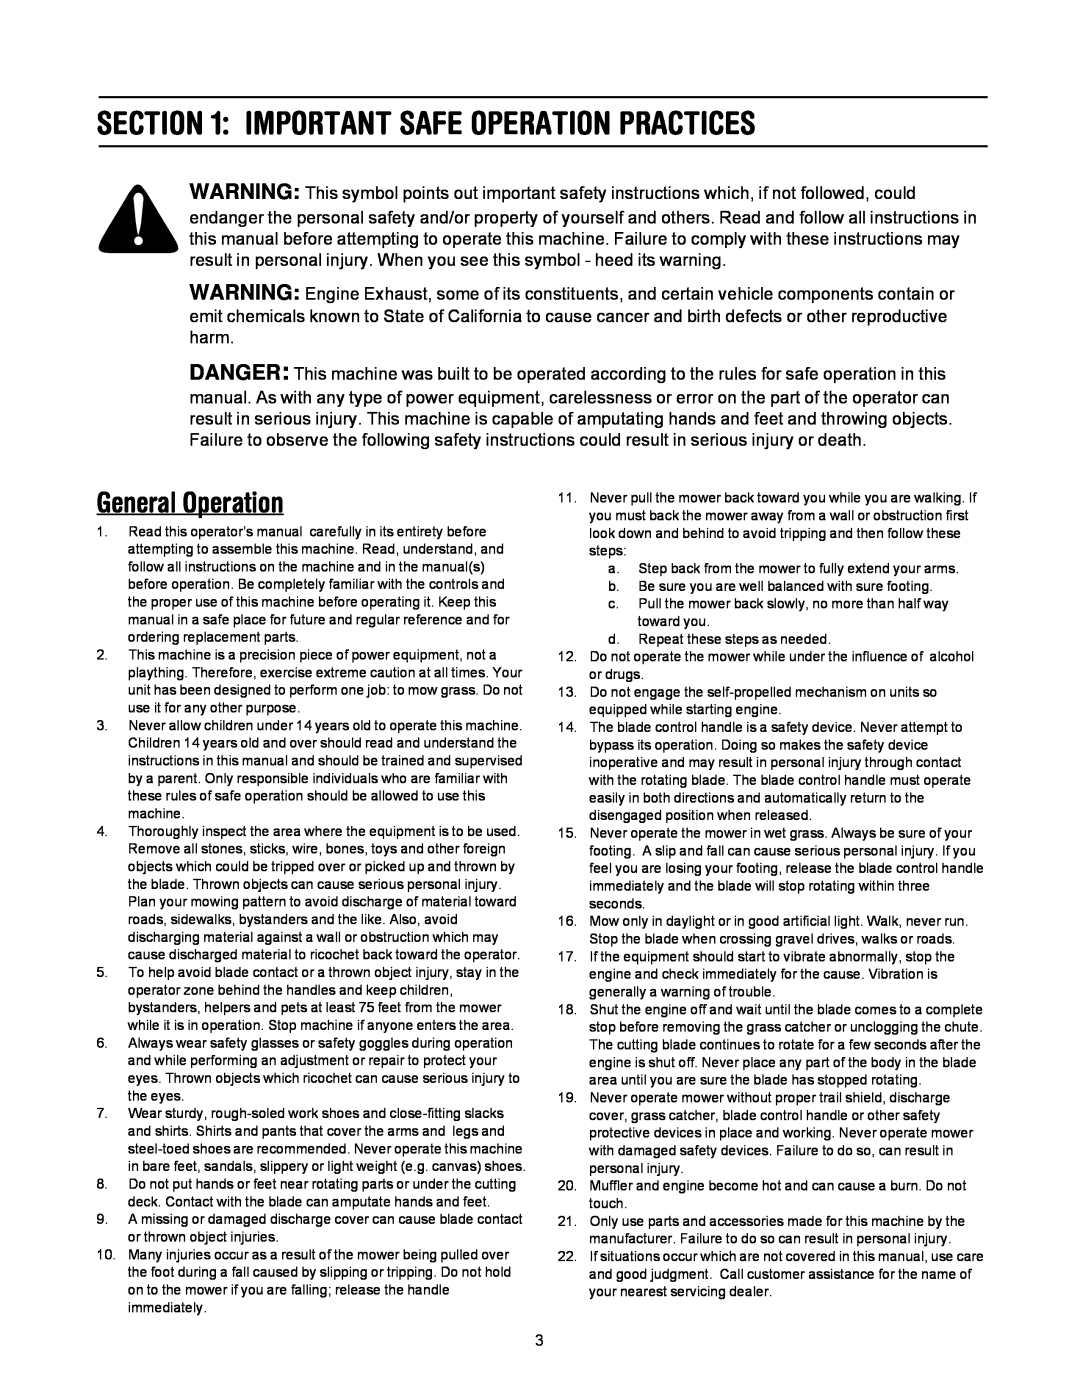 Troy-Bilt 80 manual Important Safe Operation Practices, General Operation 